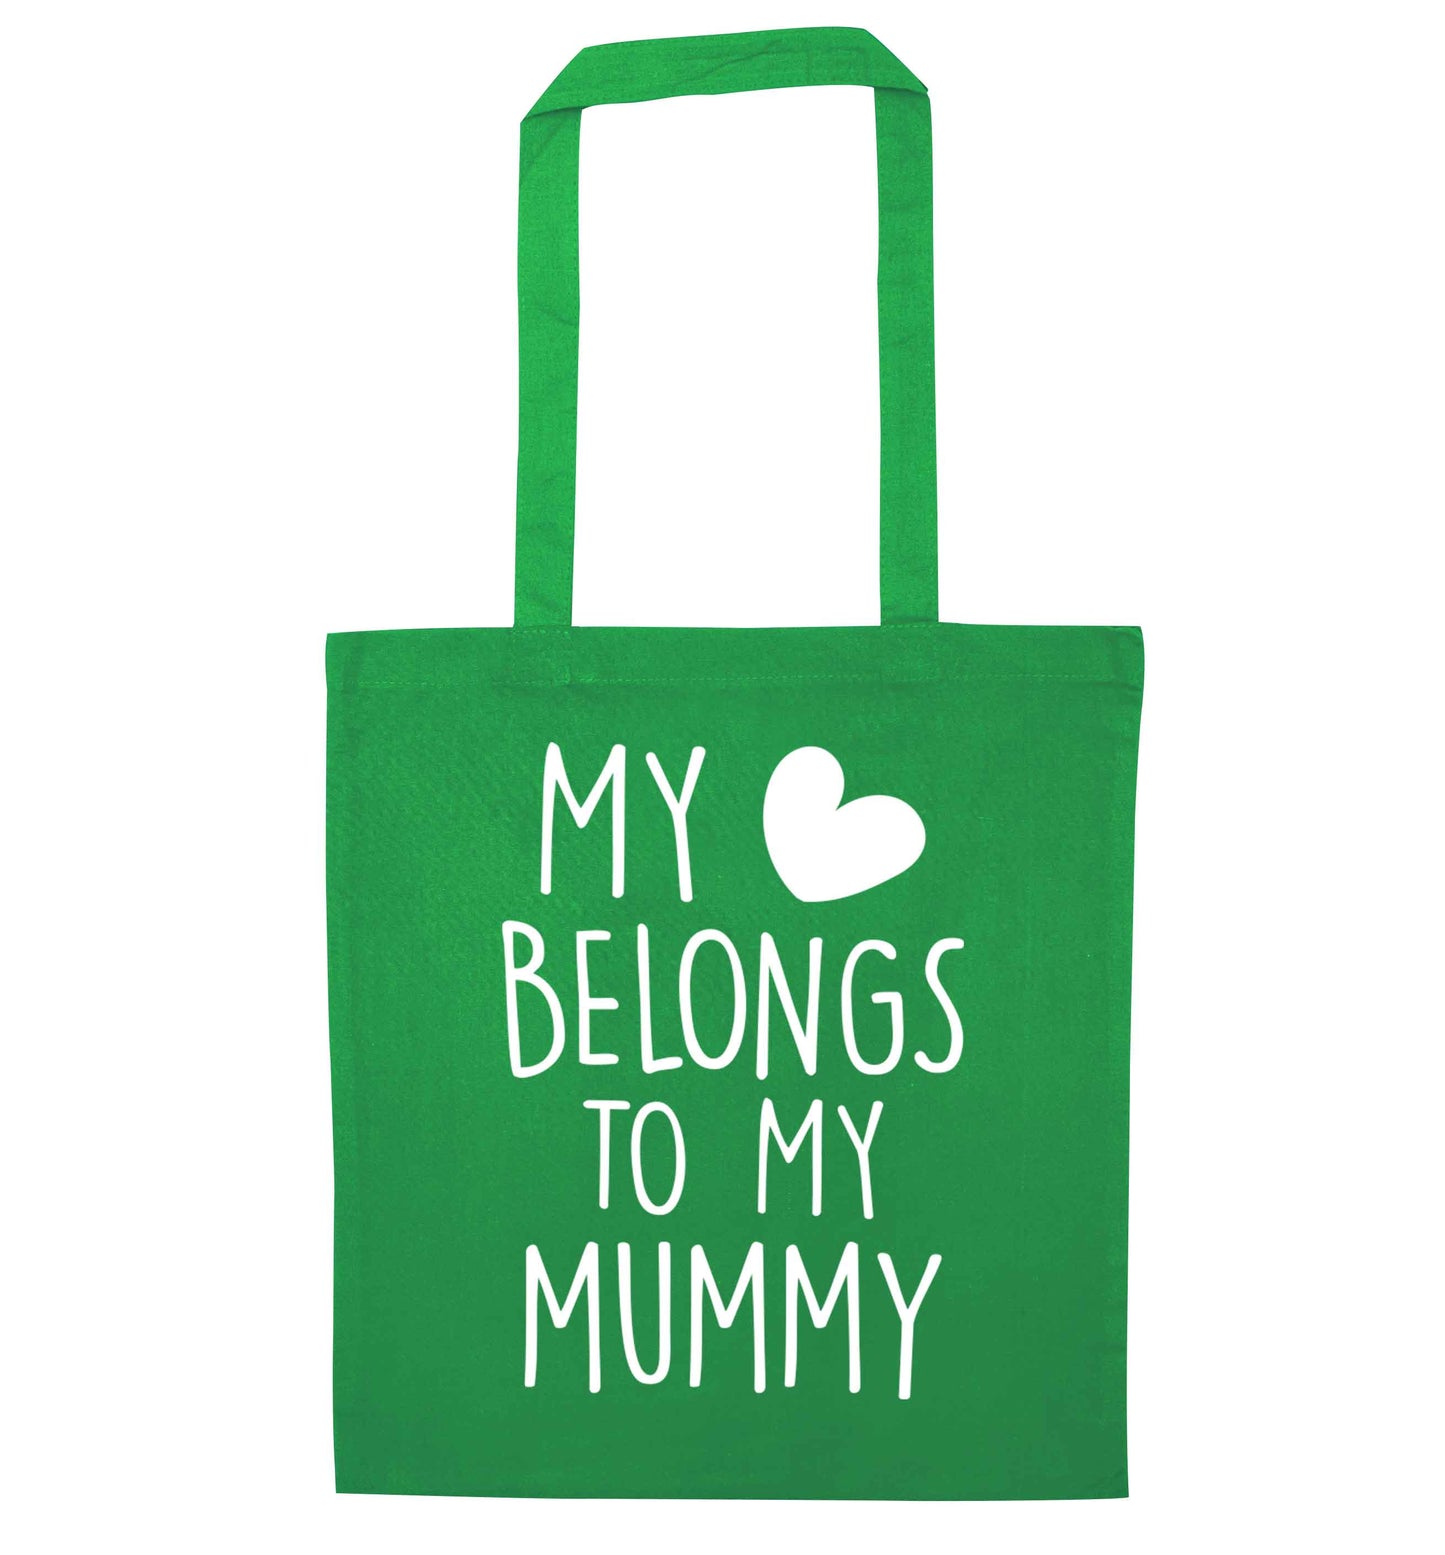 My heart belongs to my mummy green tote bag